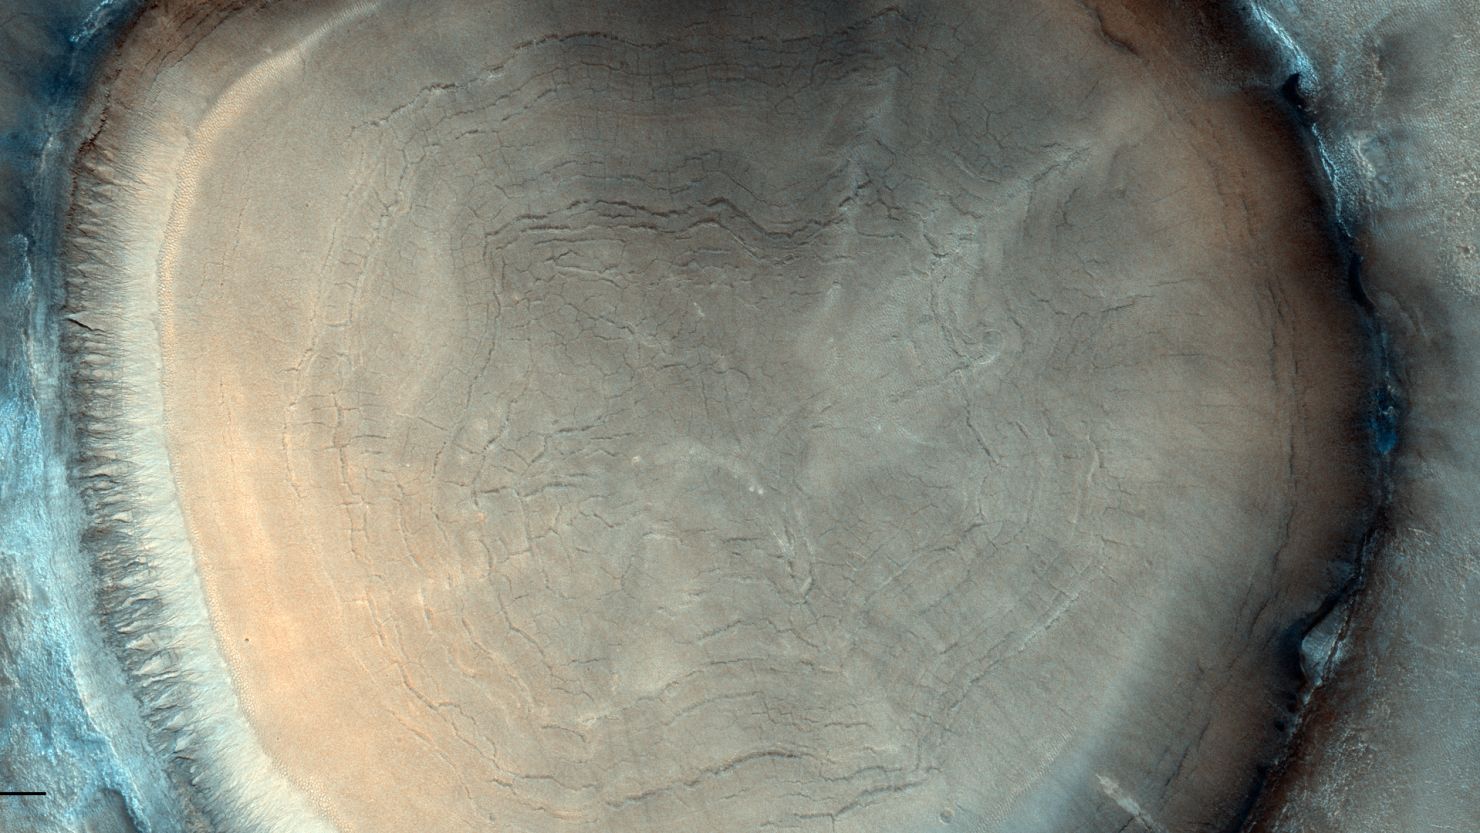 tree stump crater Mars scn